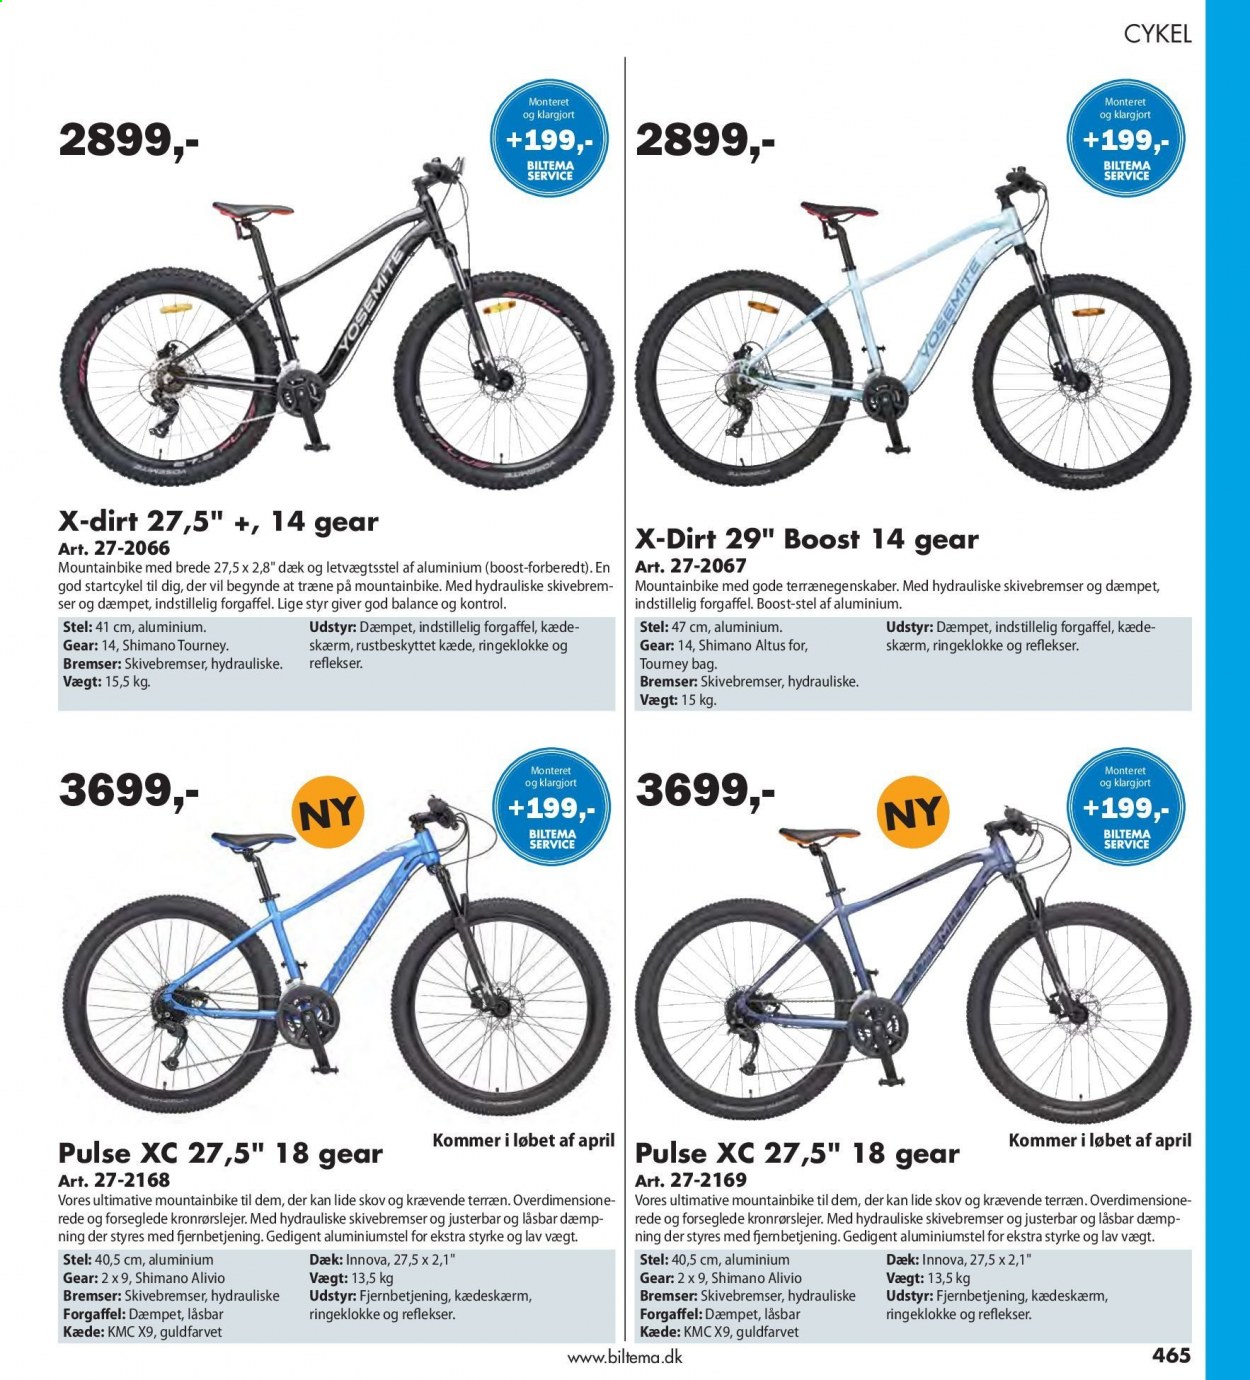 thumbnail - Biltema tilbud  - tilbudsprodukter - Shimano, cykel, mountainbike. Side 465.